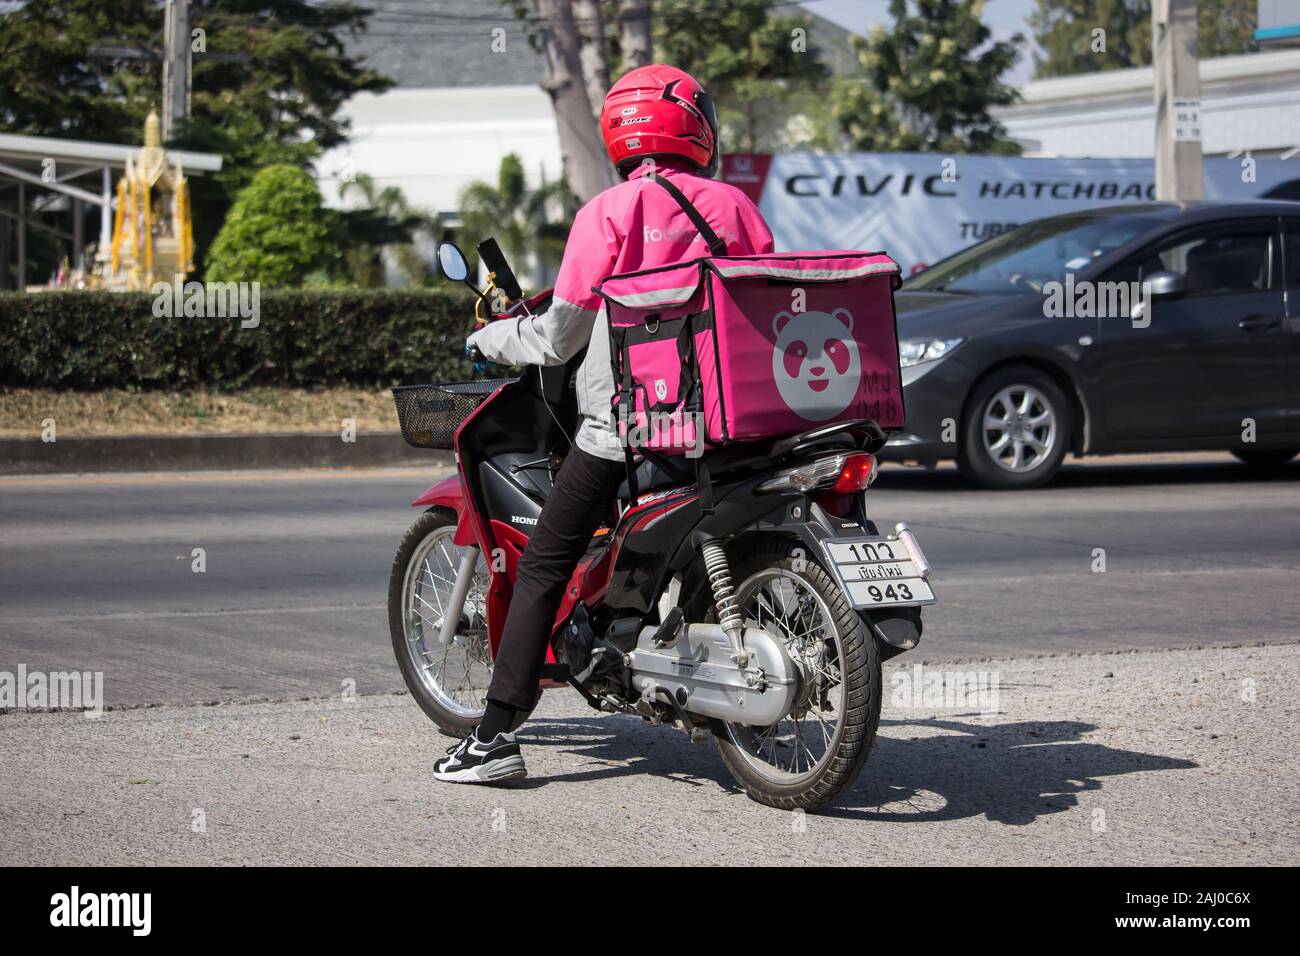 foodpanda bike delivery